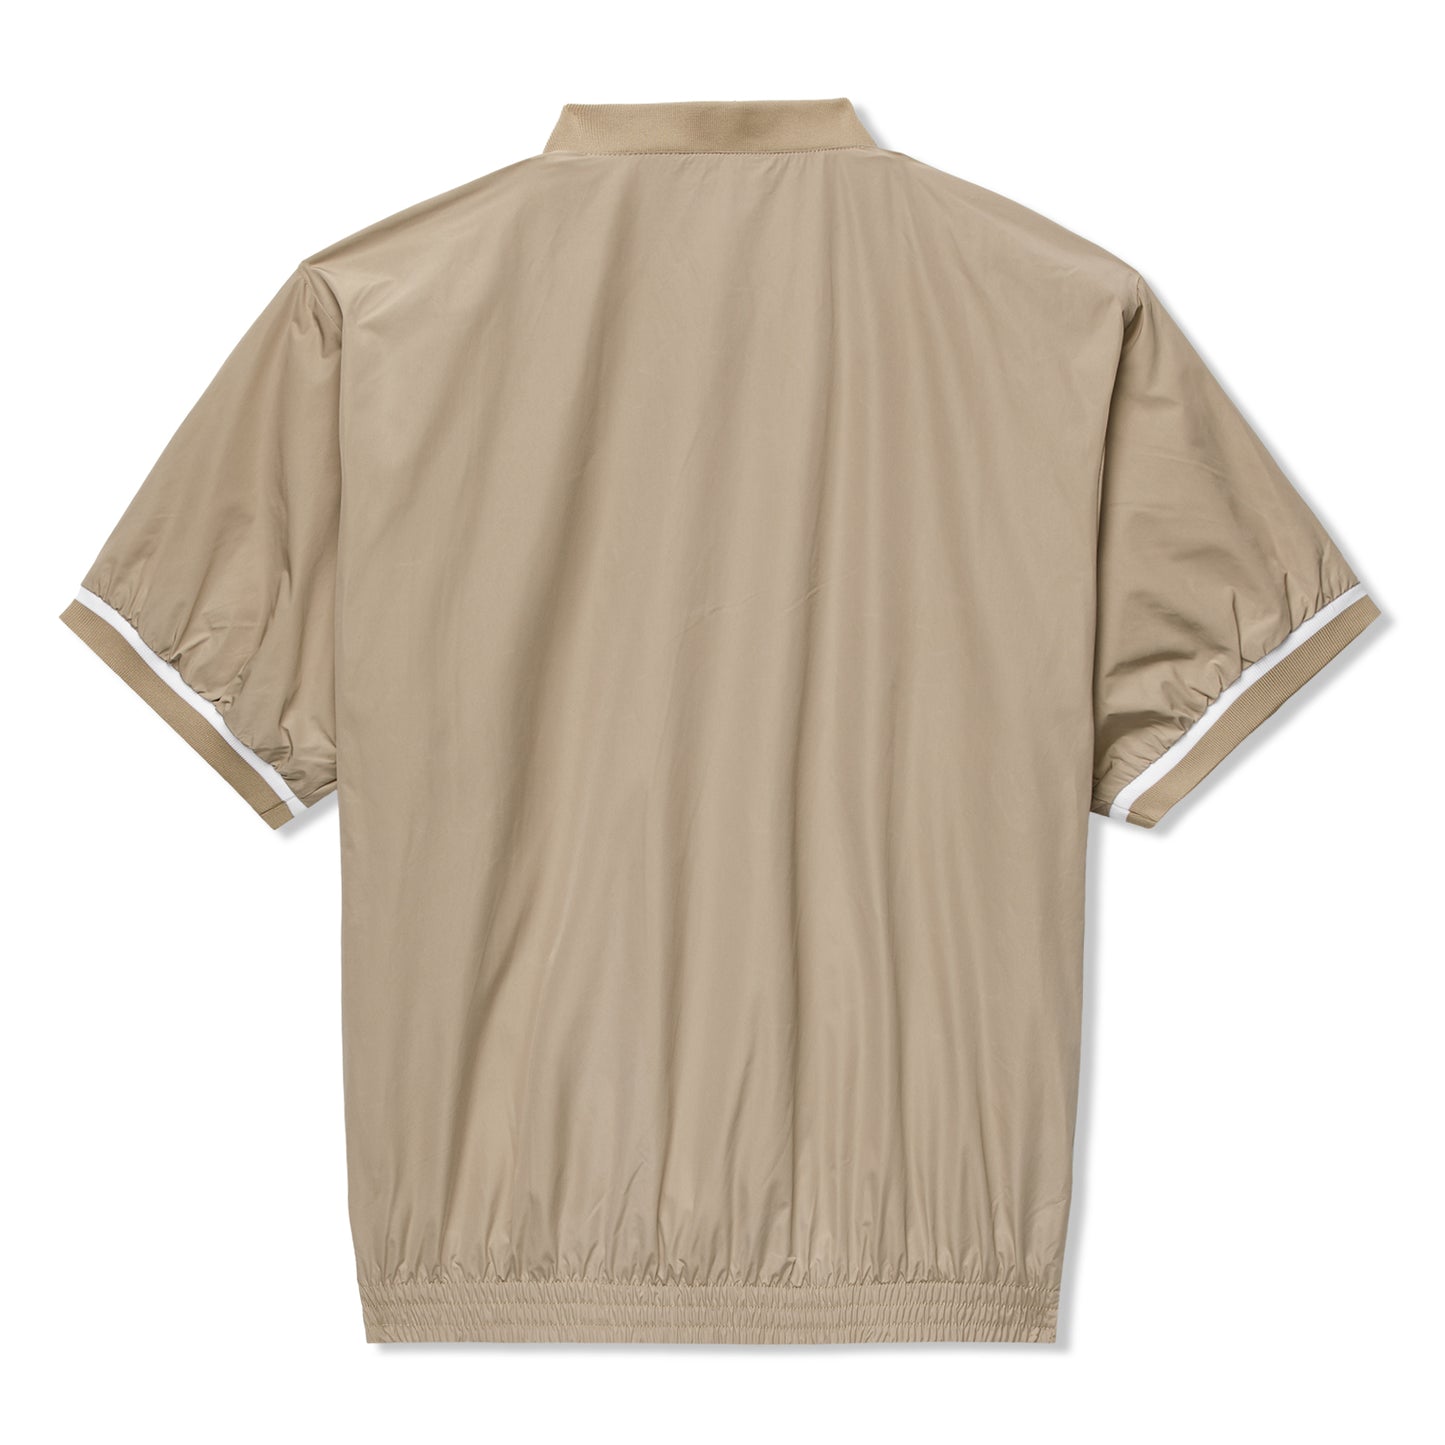 Nike Authentics Warm-Up Shirt (Khaki/White)